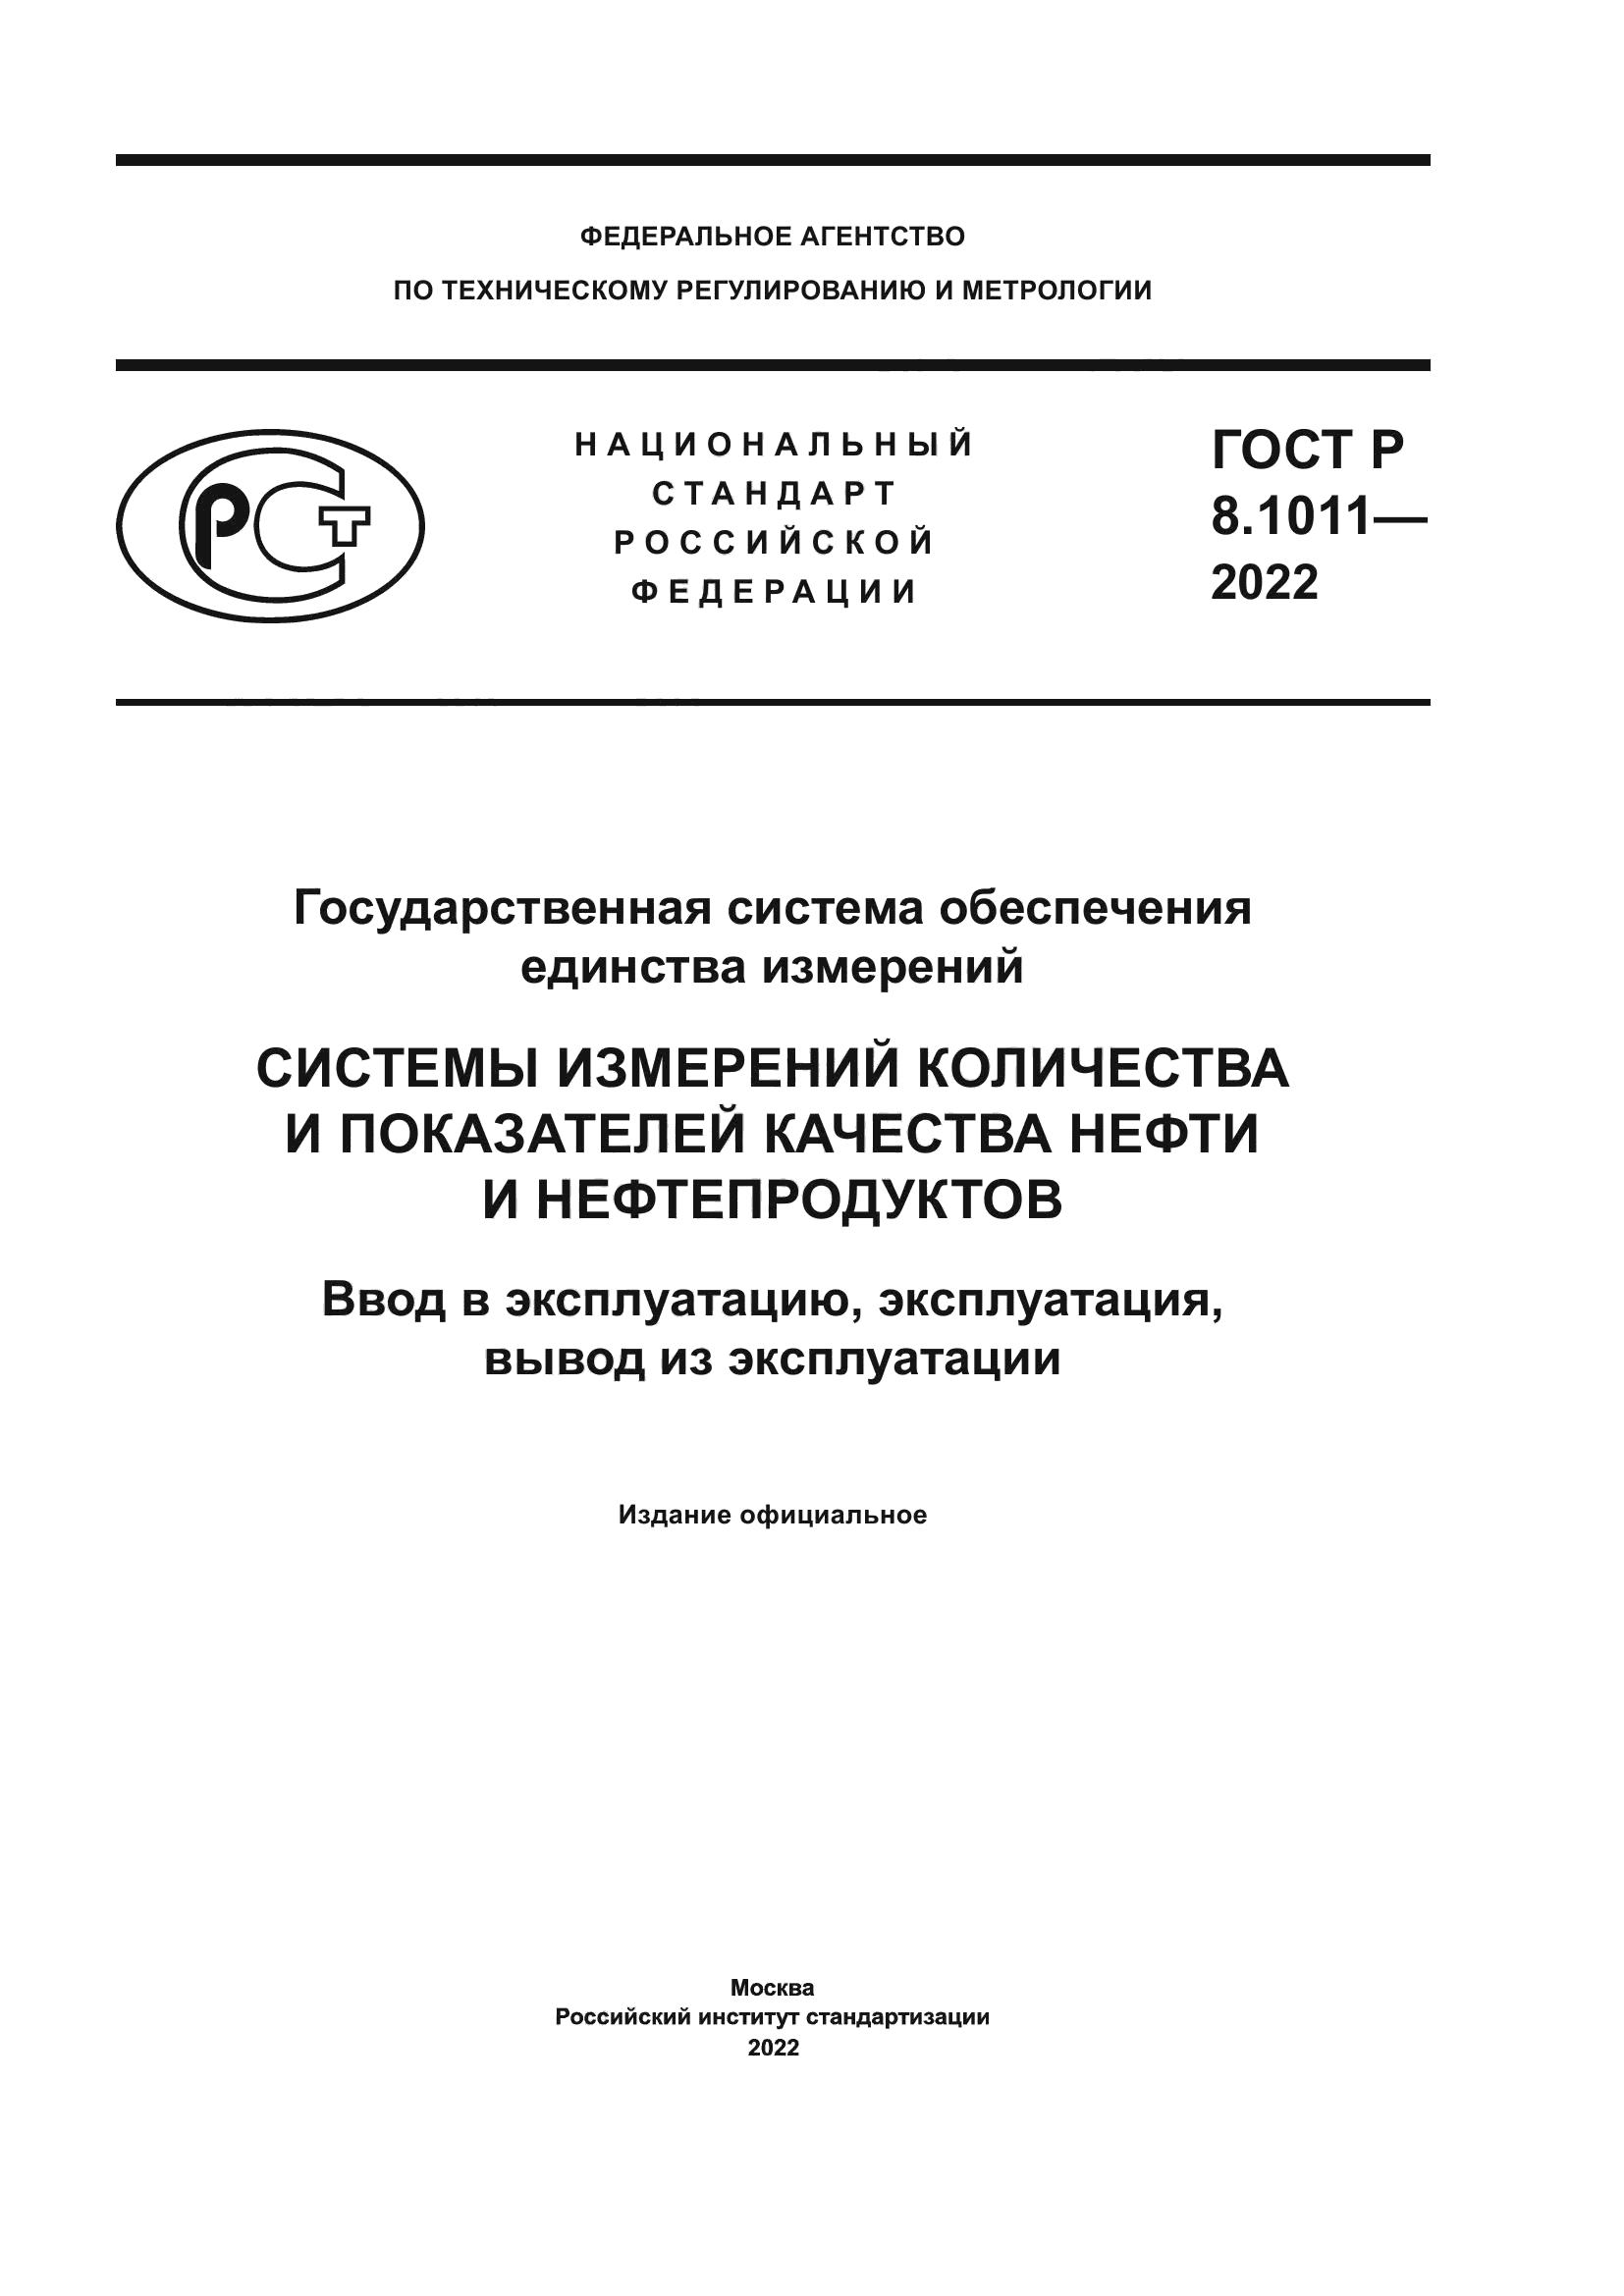 ГОСТ Р 8.1011-2022